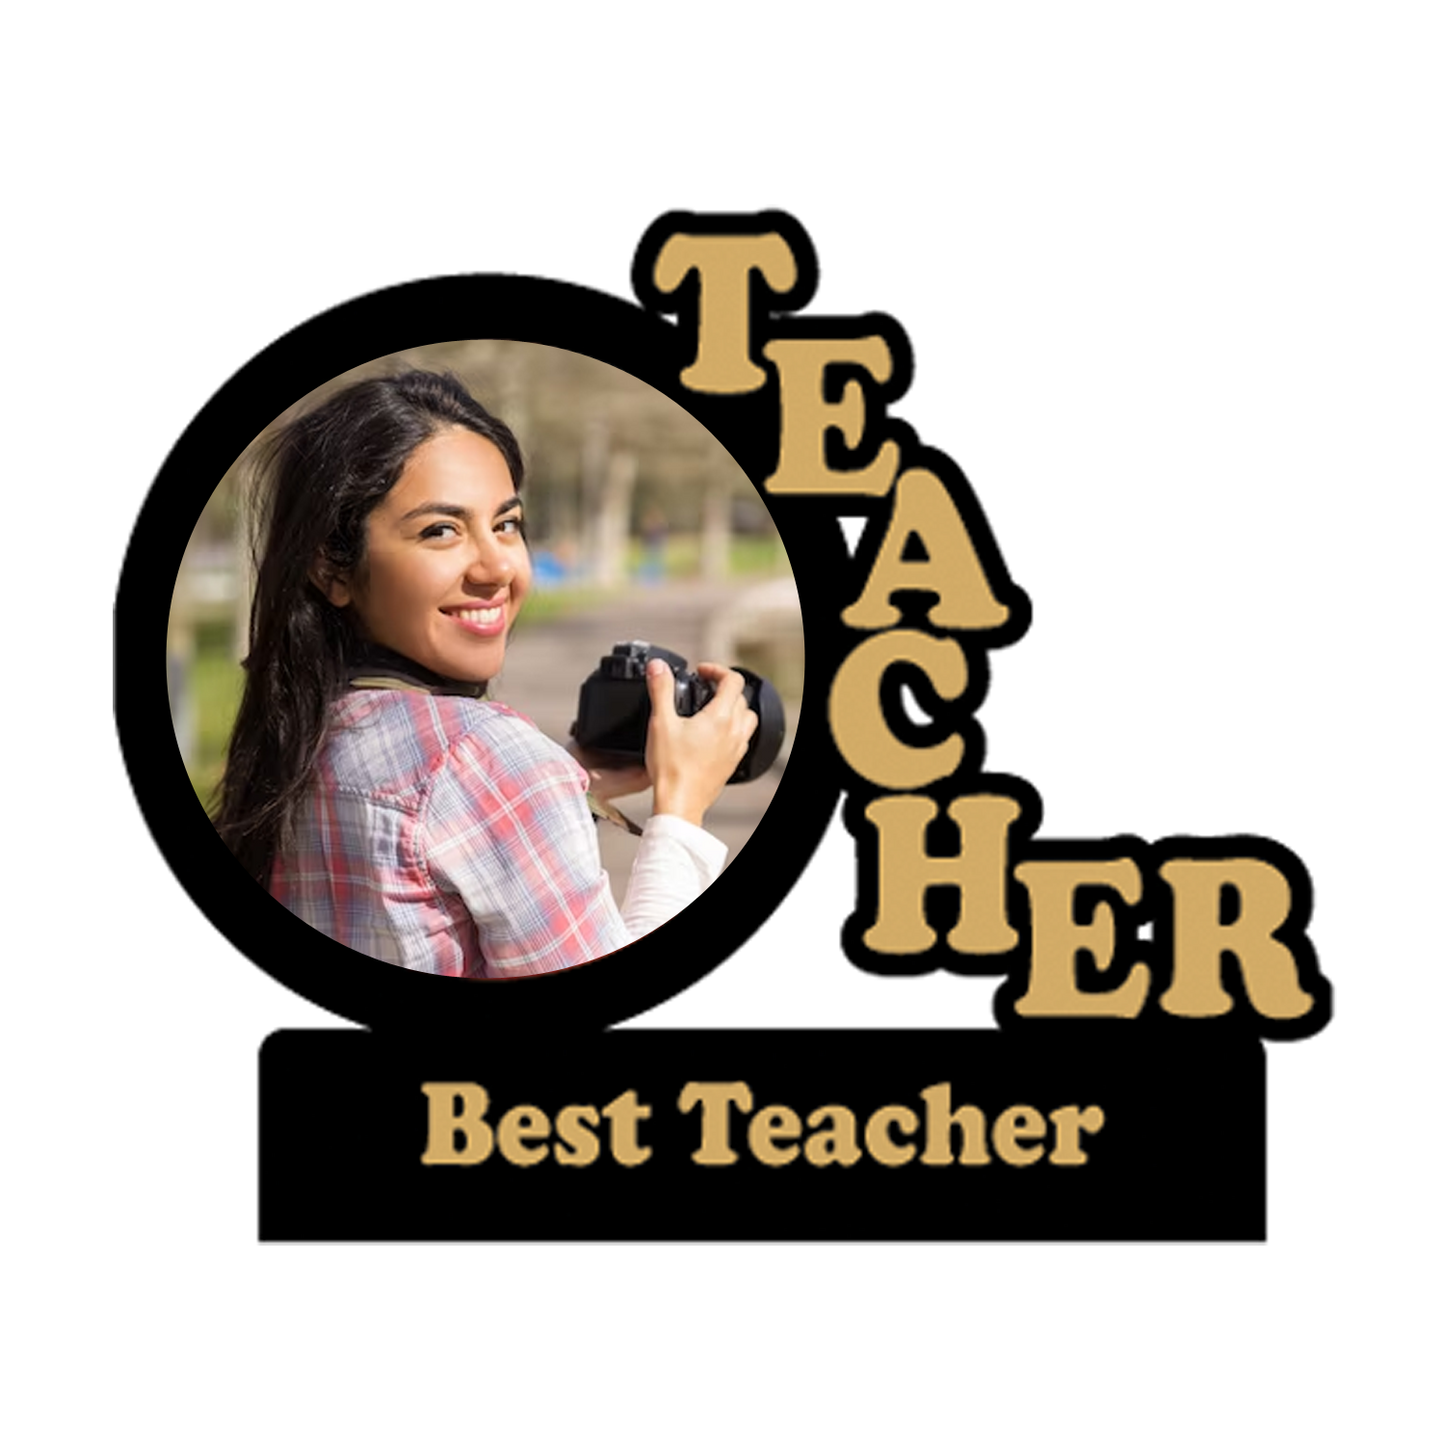 Best Teacher Table Frame | 11x9 inches